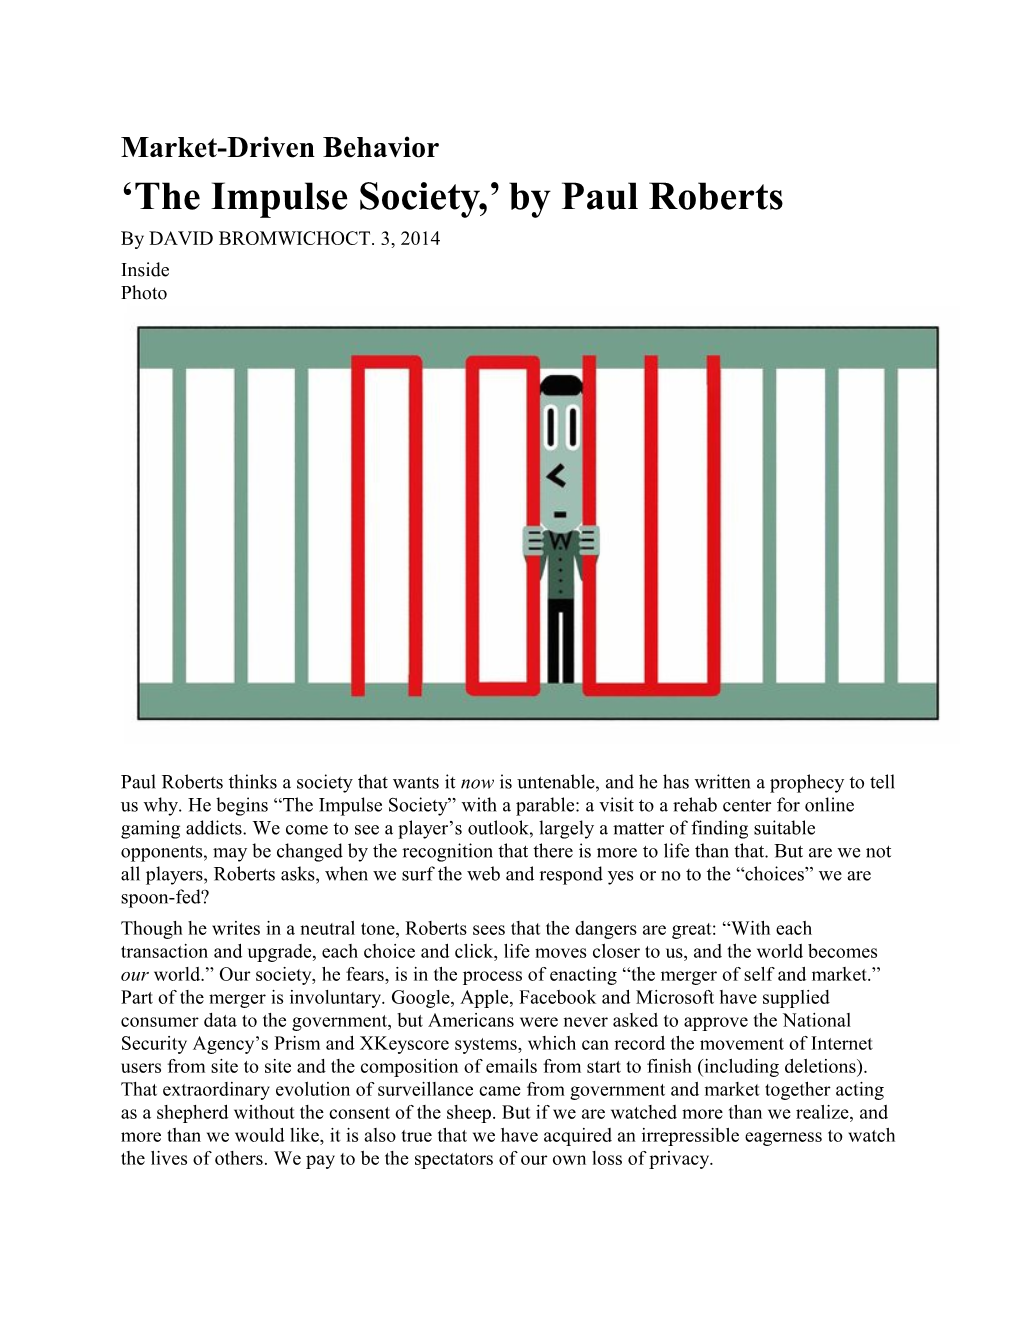 The Impulse Society, by Paul Roberts